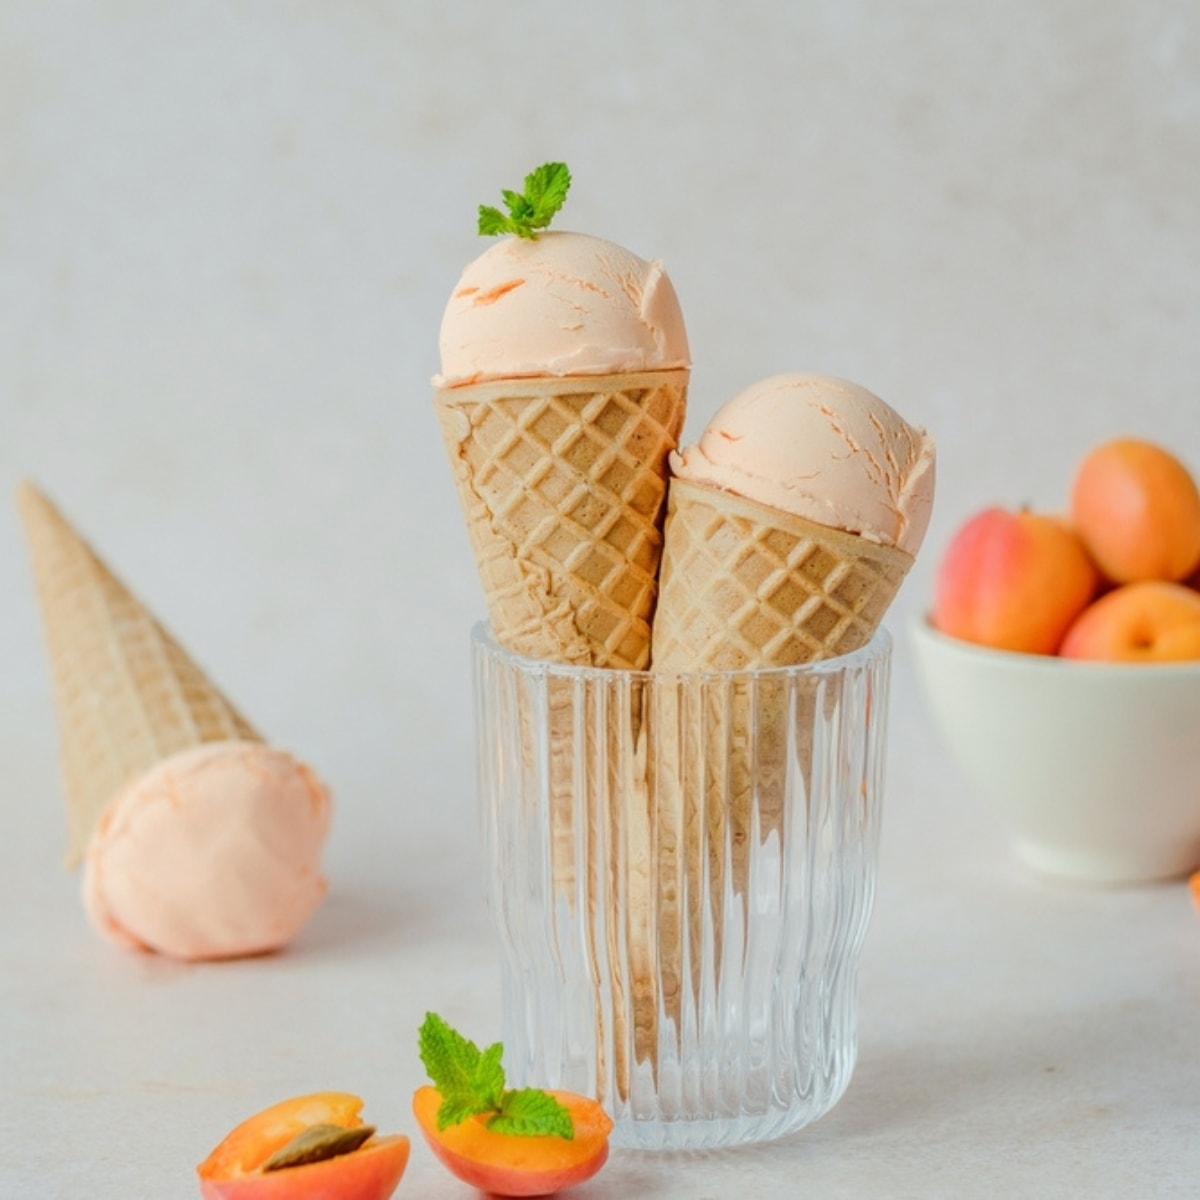 Gluten-Free Cones With peach Flavored Ice Cream